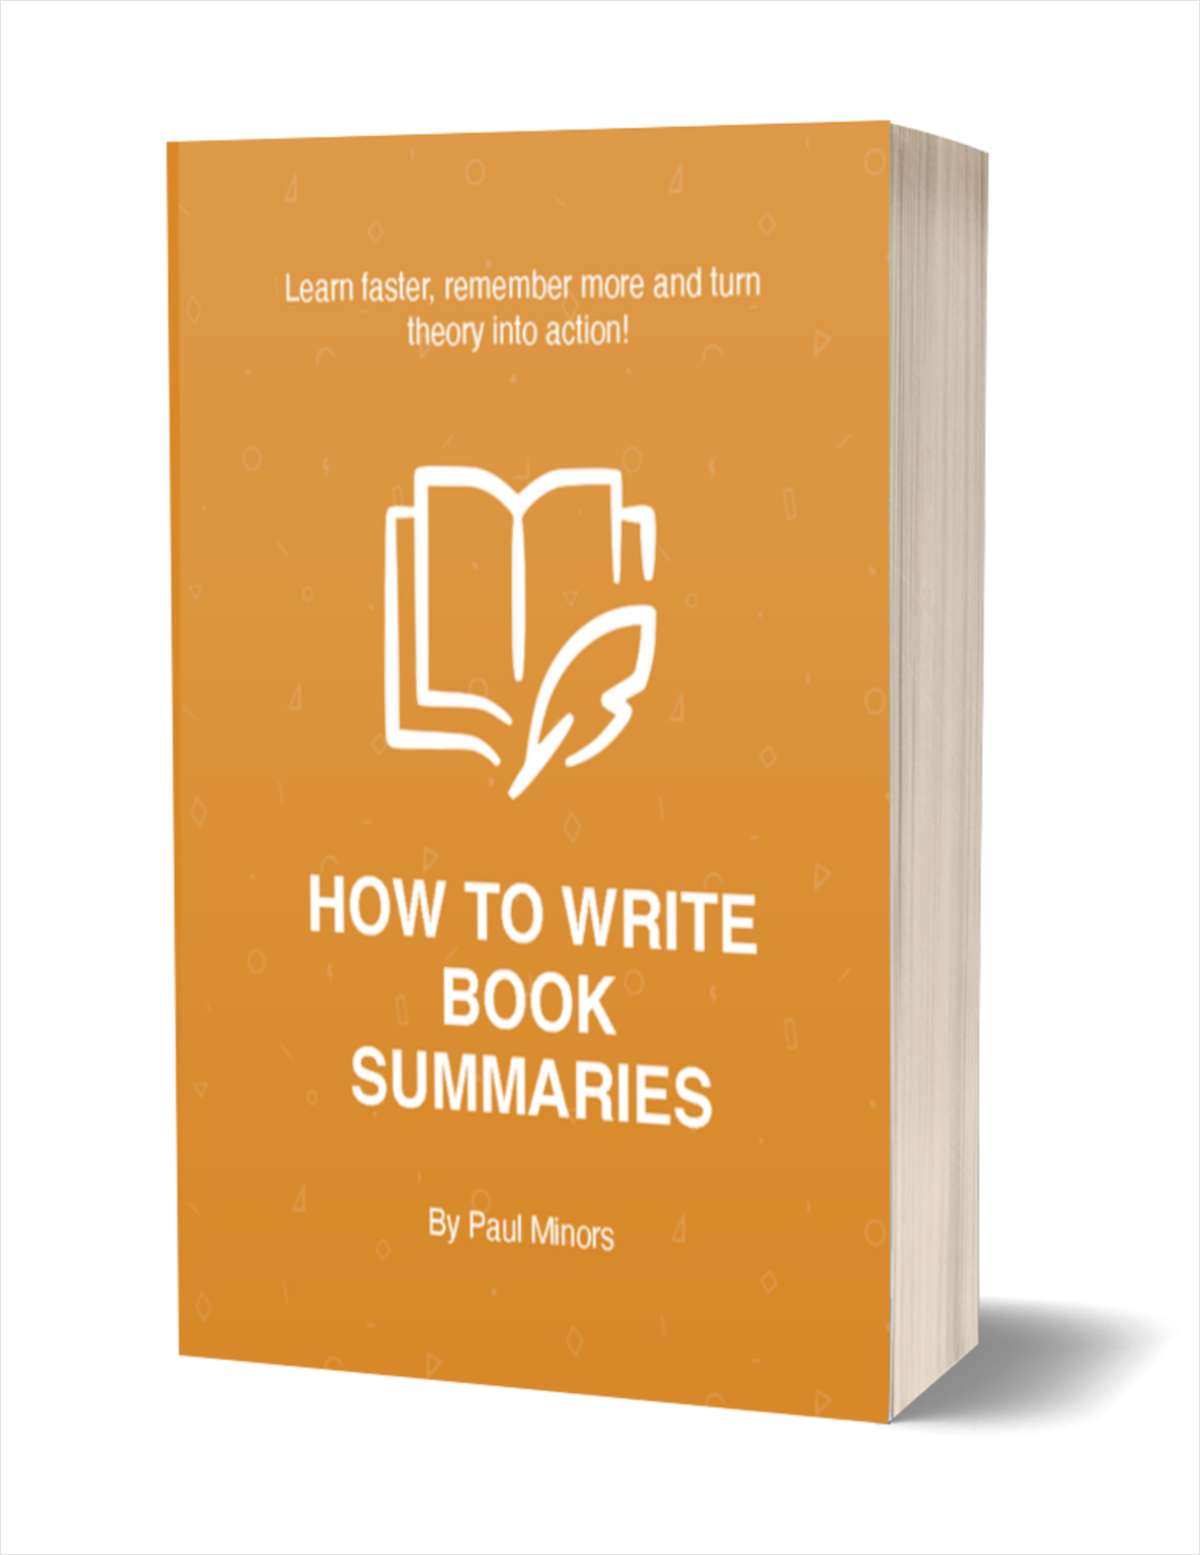 How to Write Book Summaries